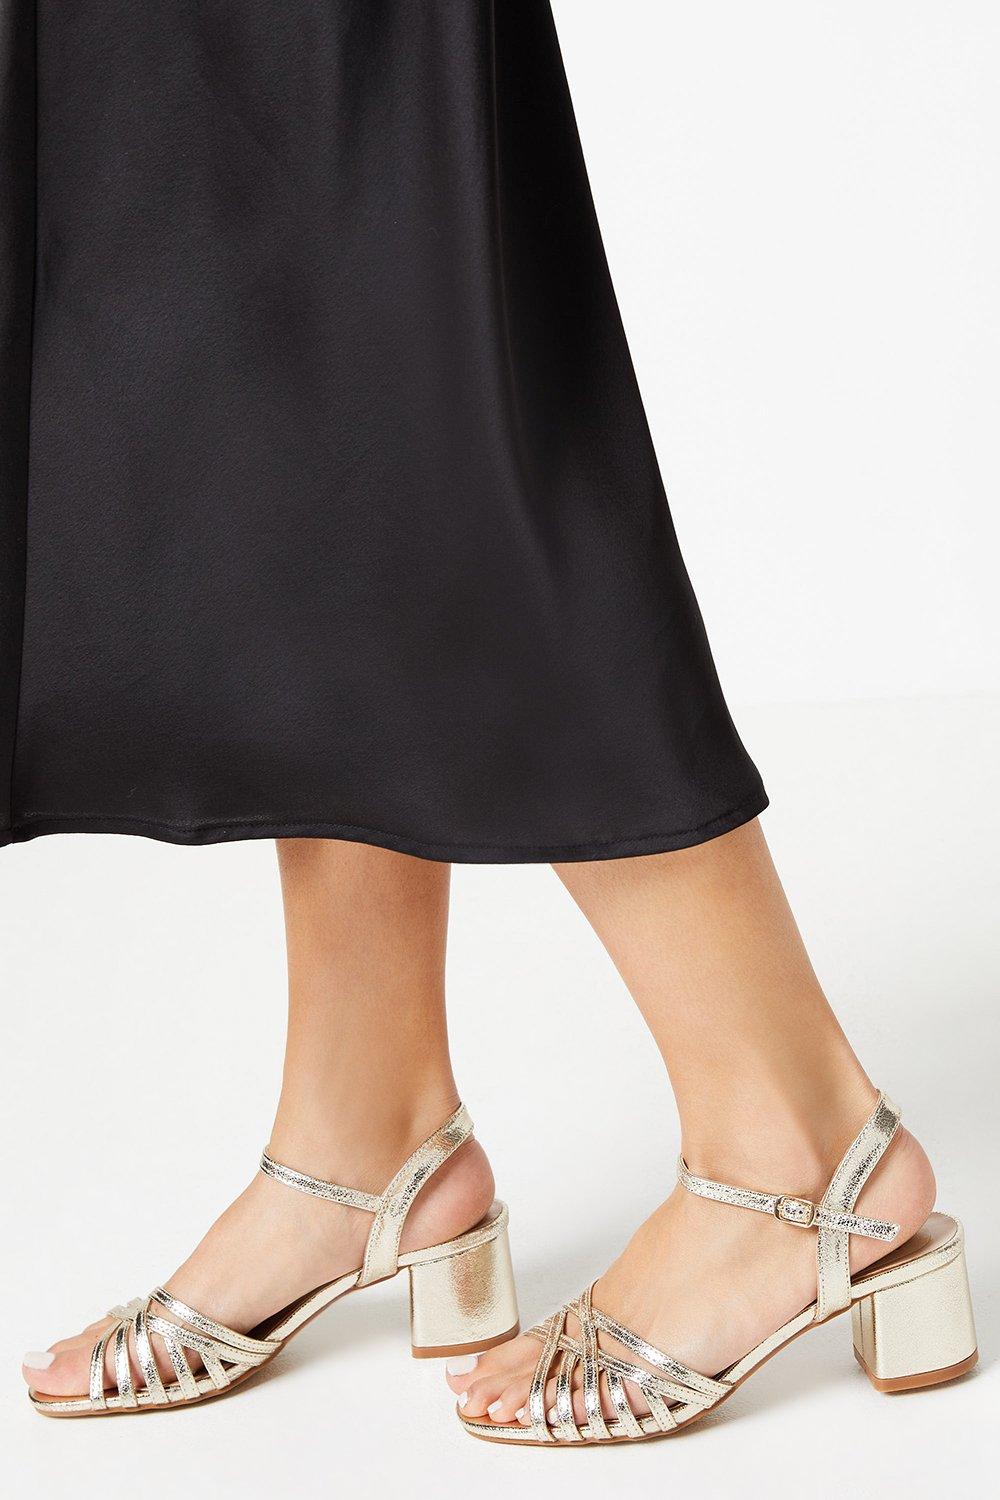 Womens Good For The Sole: Erica Lattice Front Medium Block Heeled Sandals